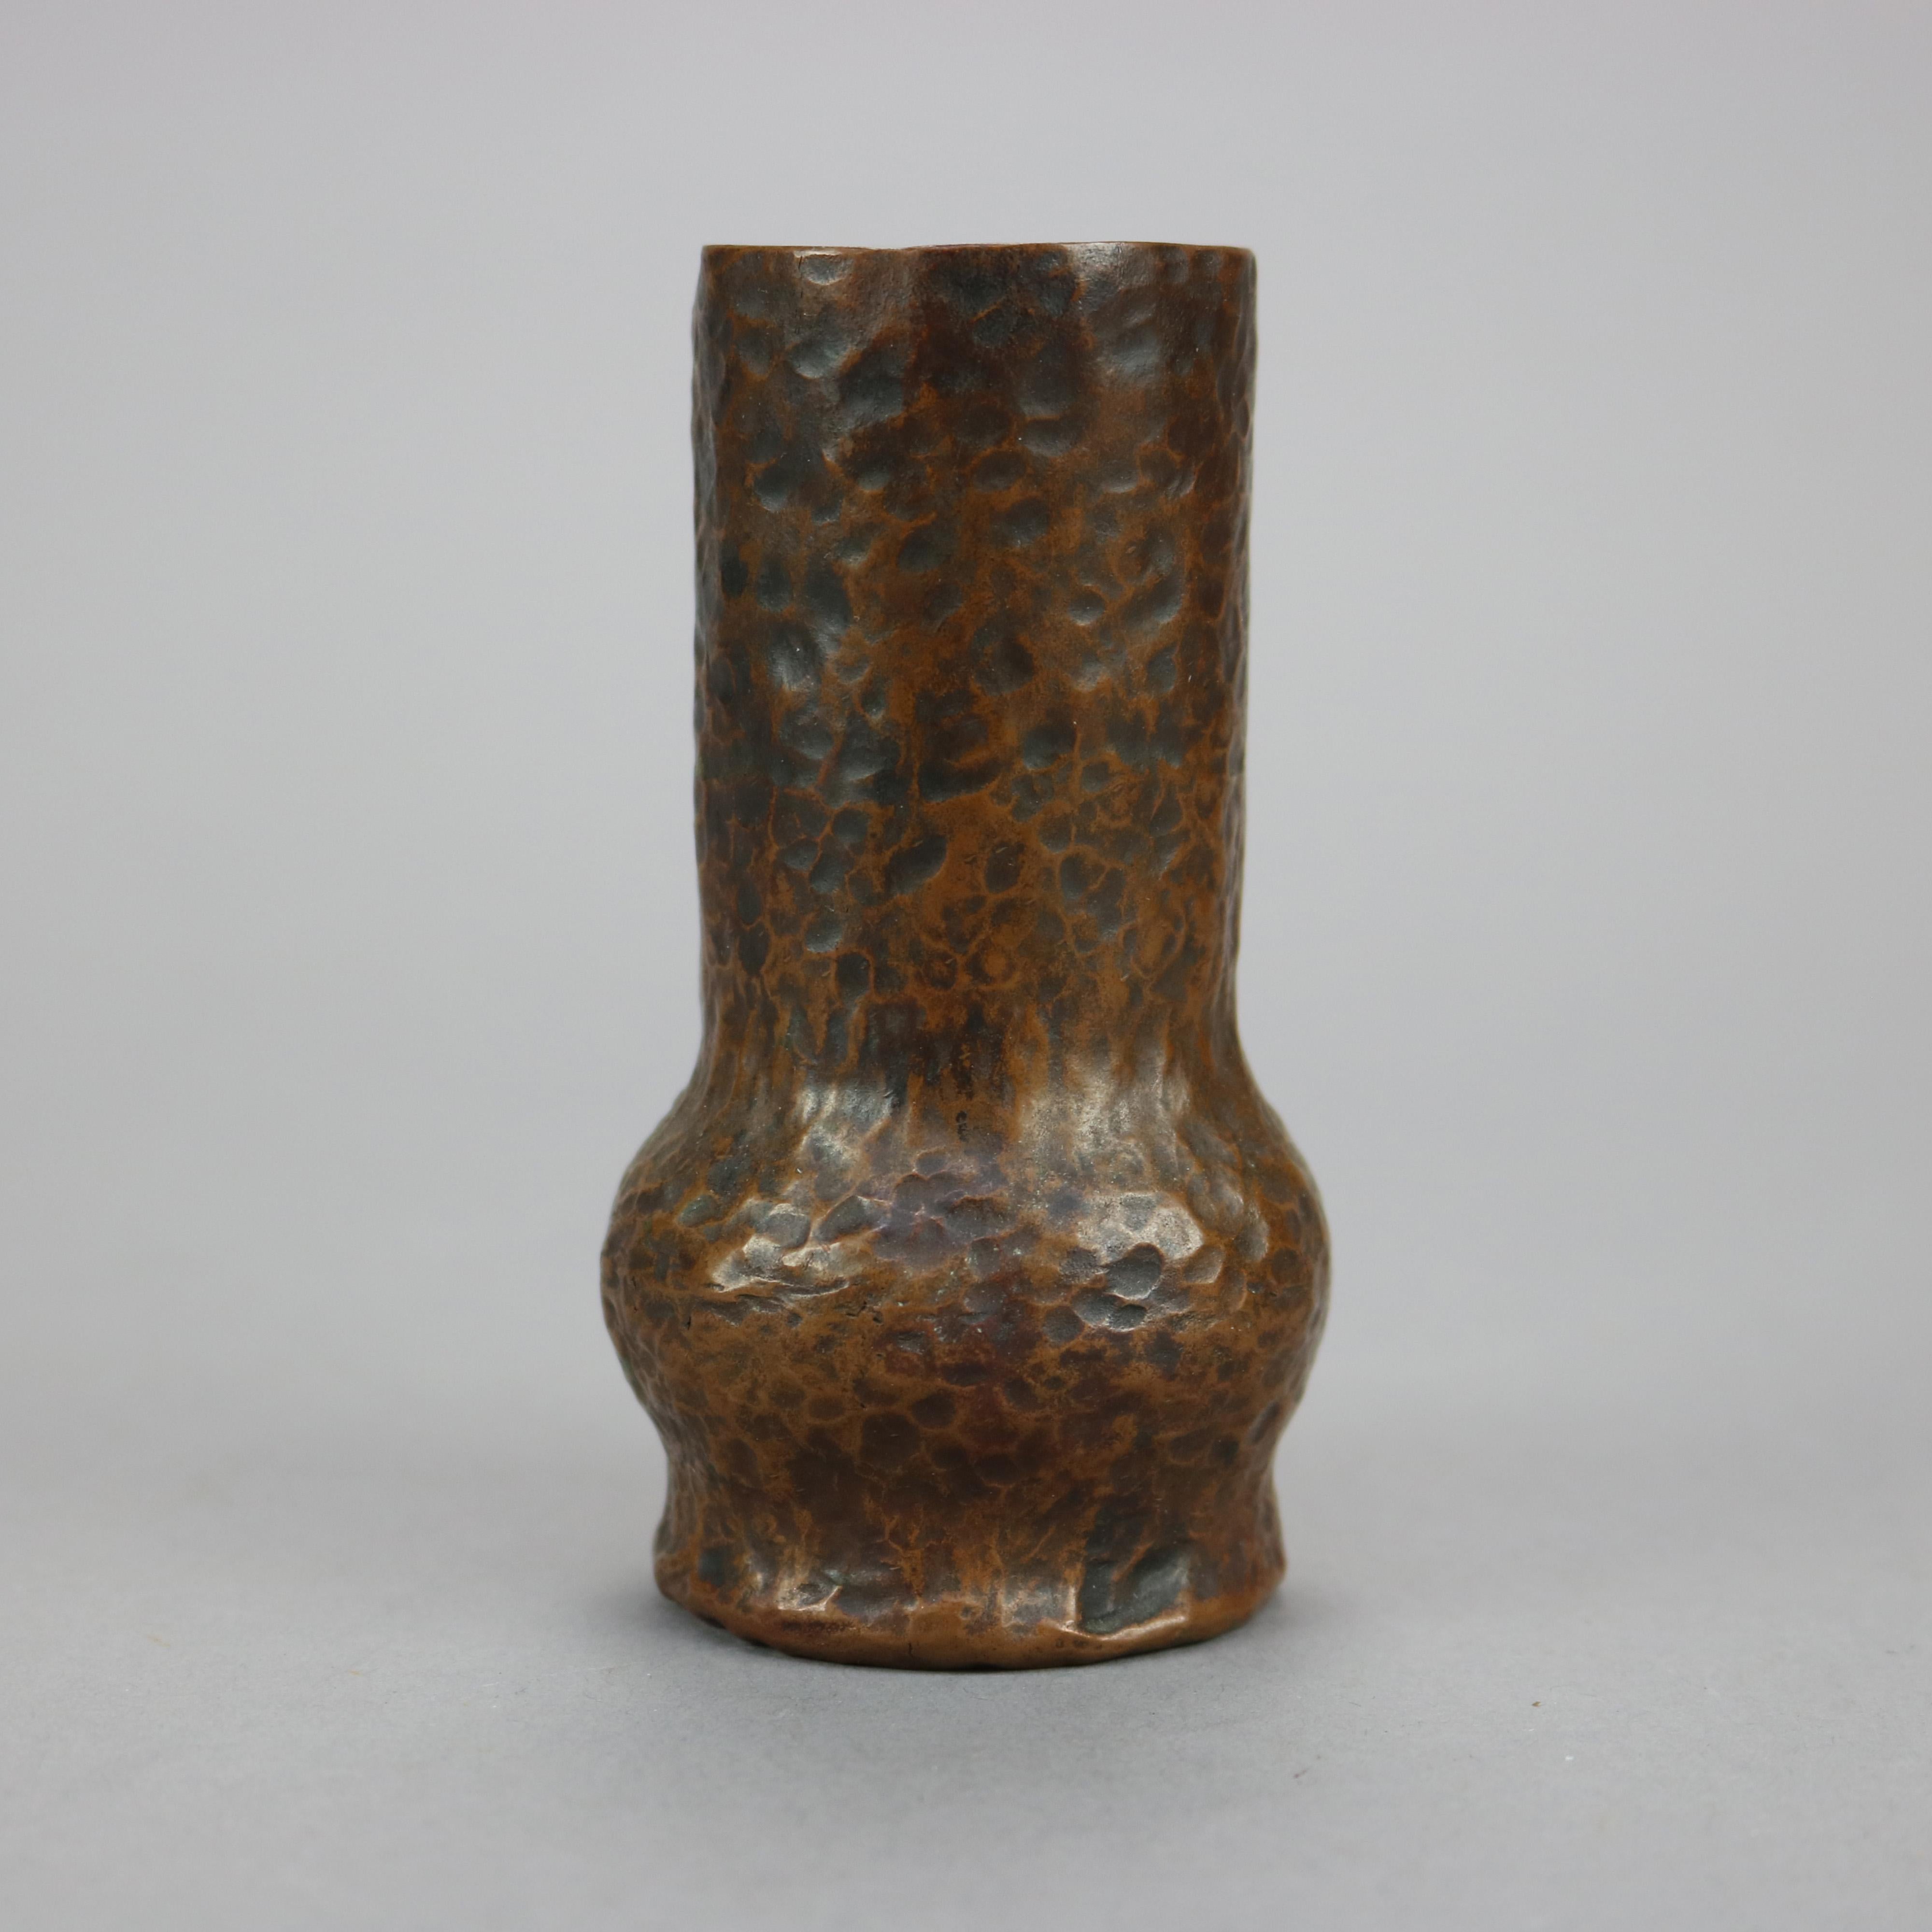 American Antique Arts & Crafts Hammered Copper Cabinet Vase, Circa 1910